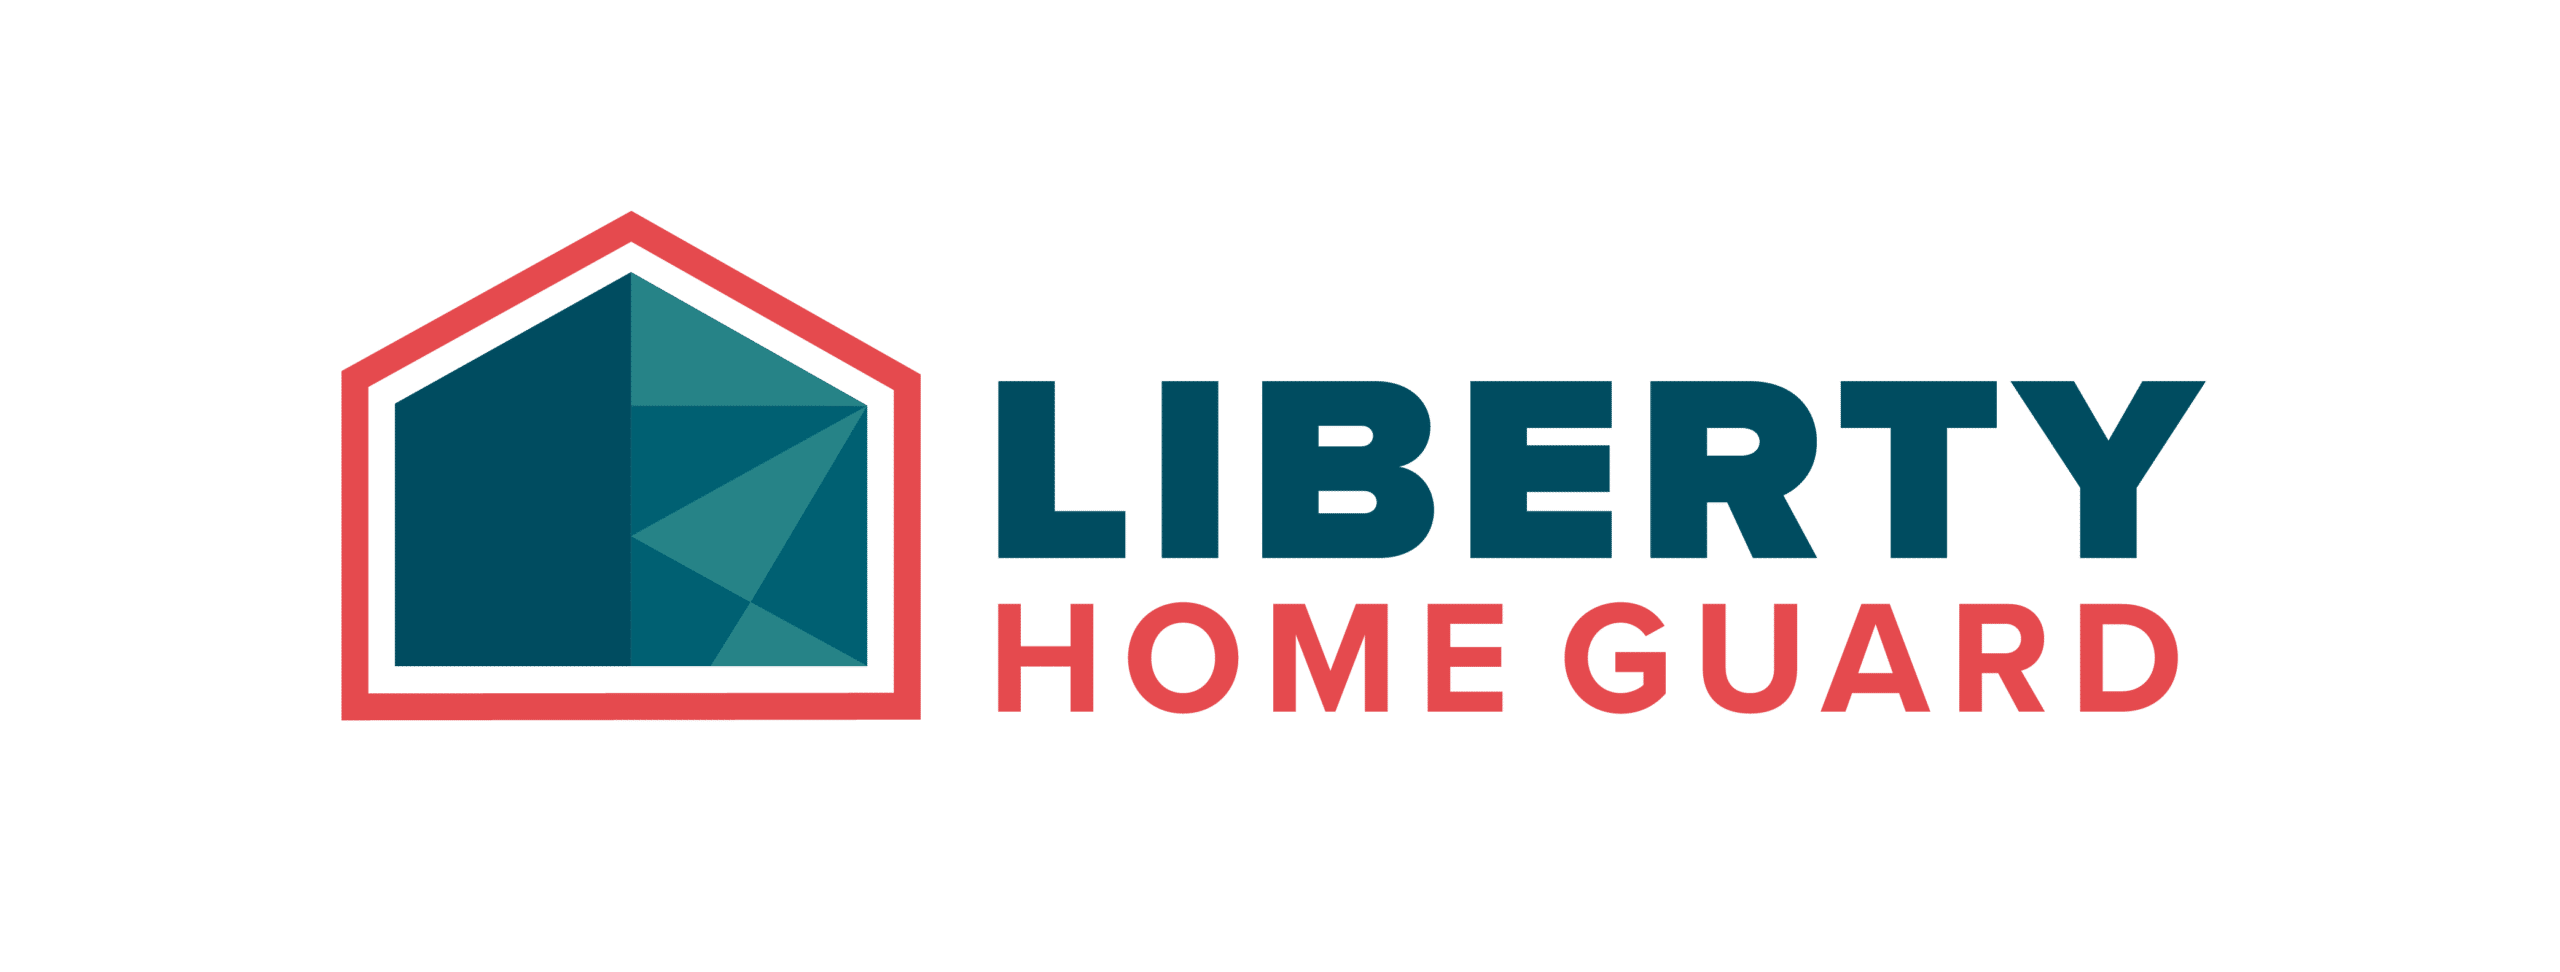 Liberty Home Guard logo